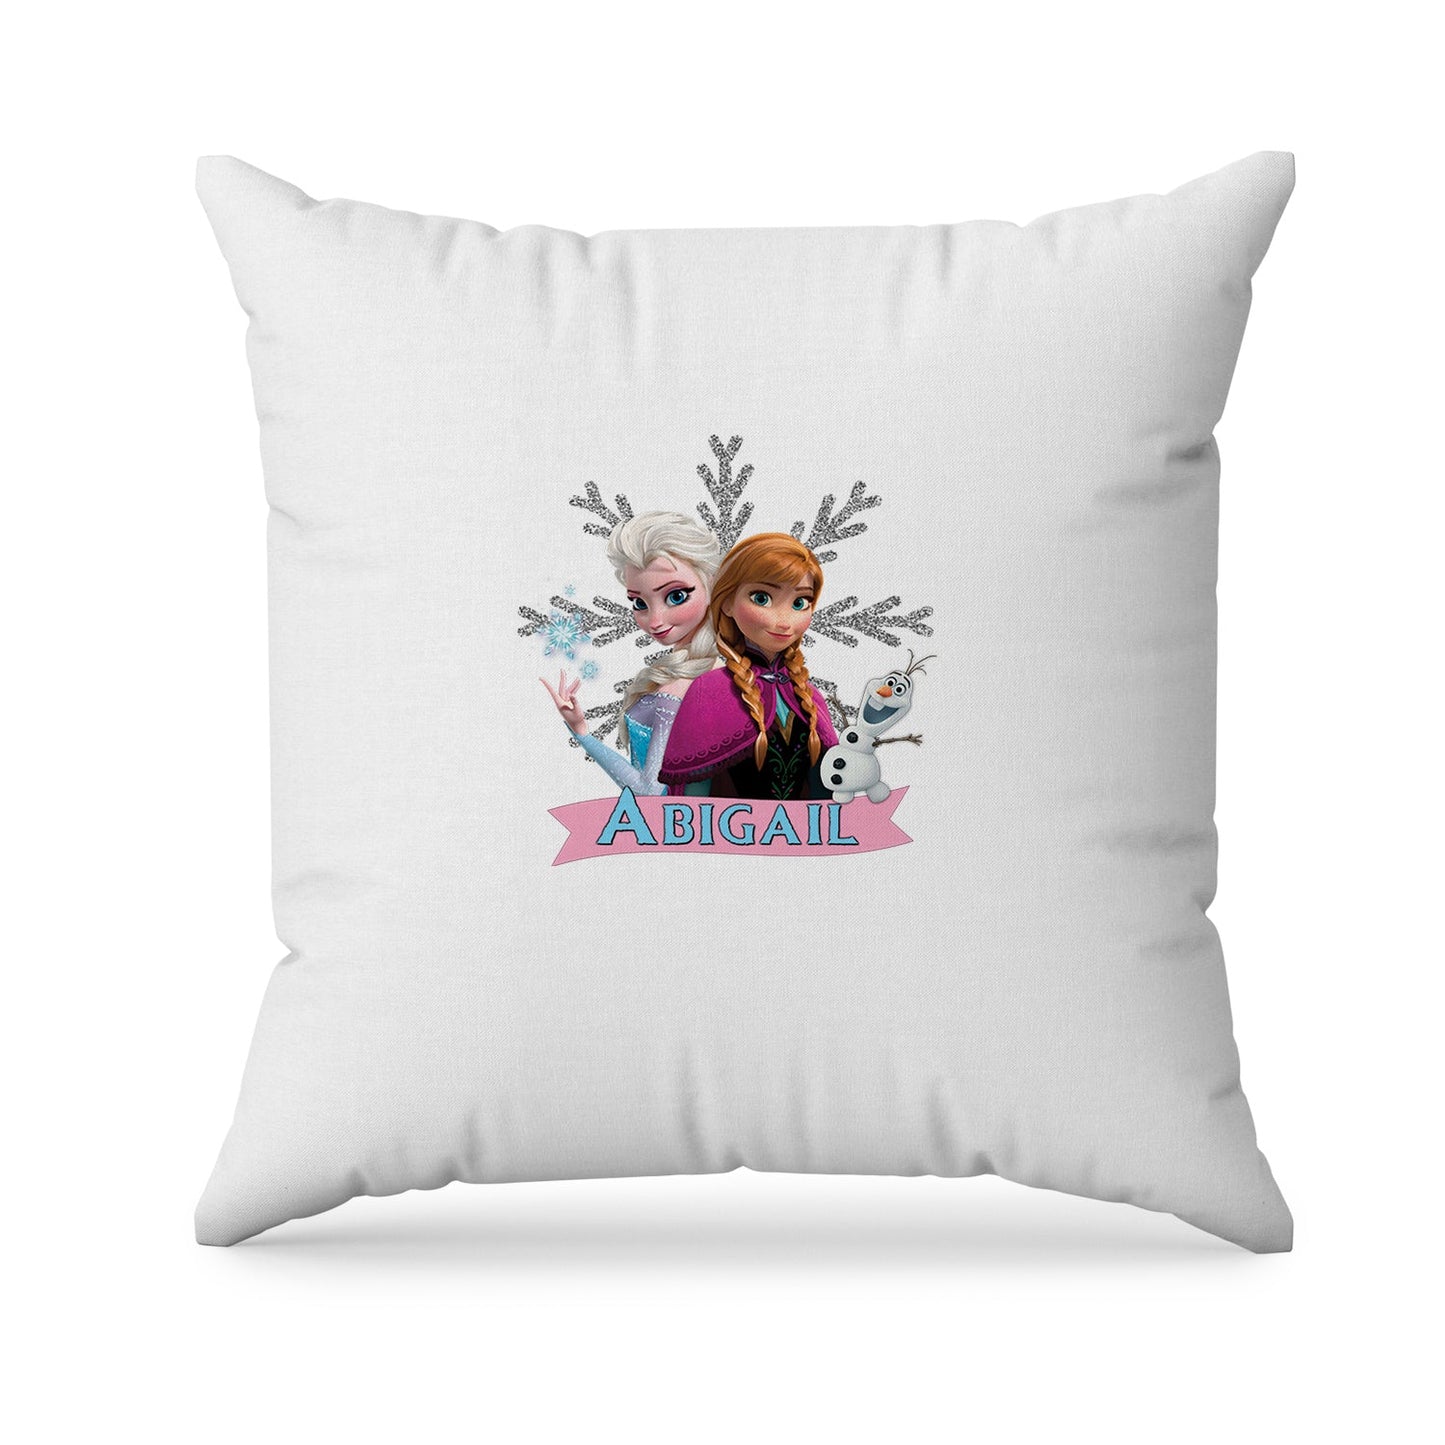 Frozen themed sublimation pillowcase